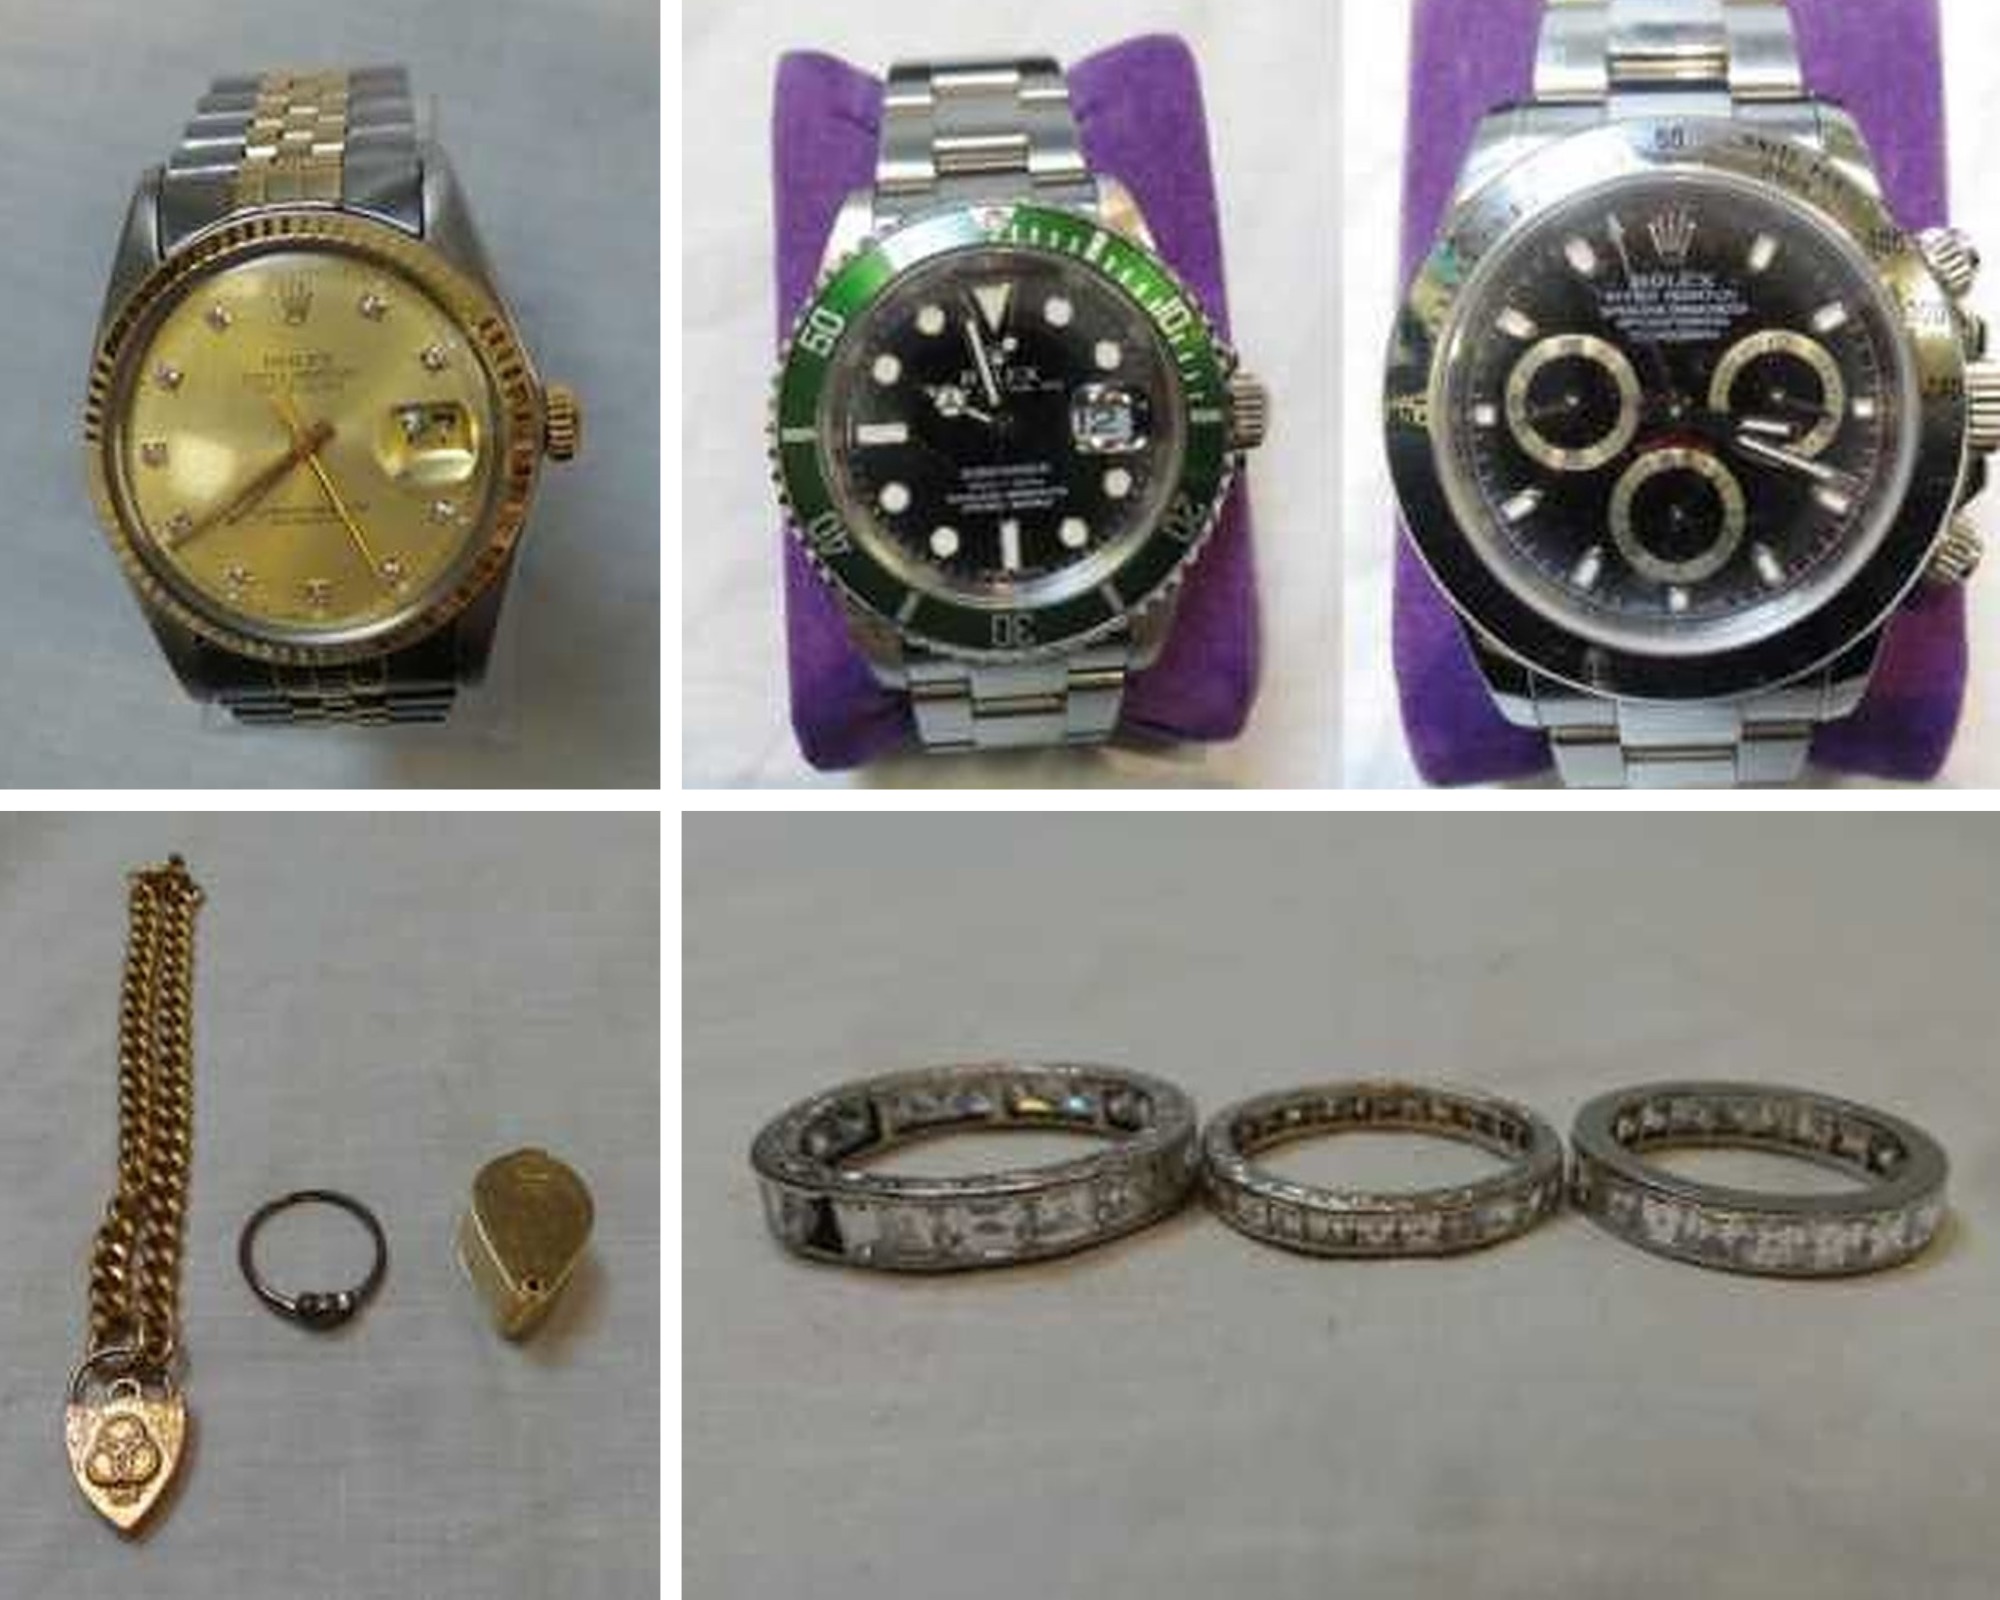 Rolex watches and gold, platinum and diamond jewellery seized through POCA proceedings